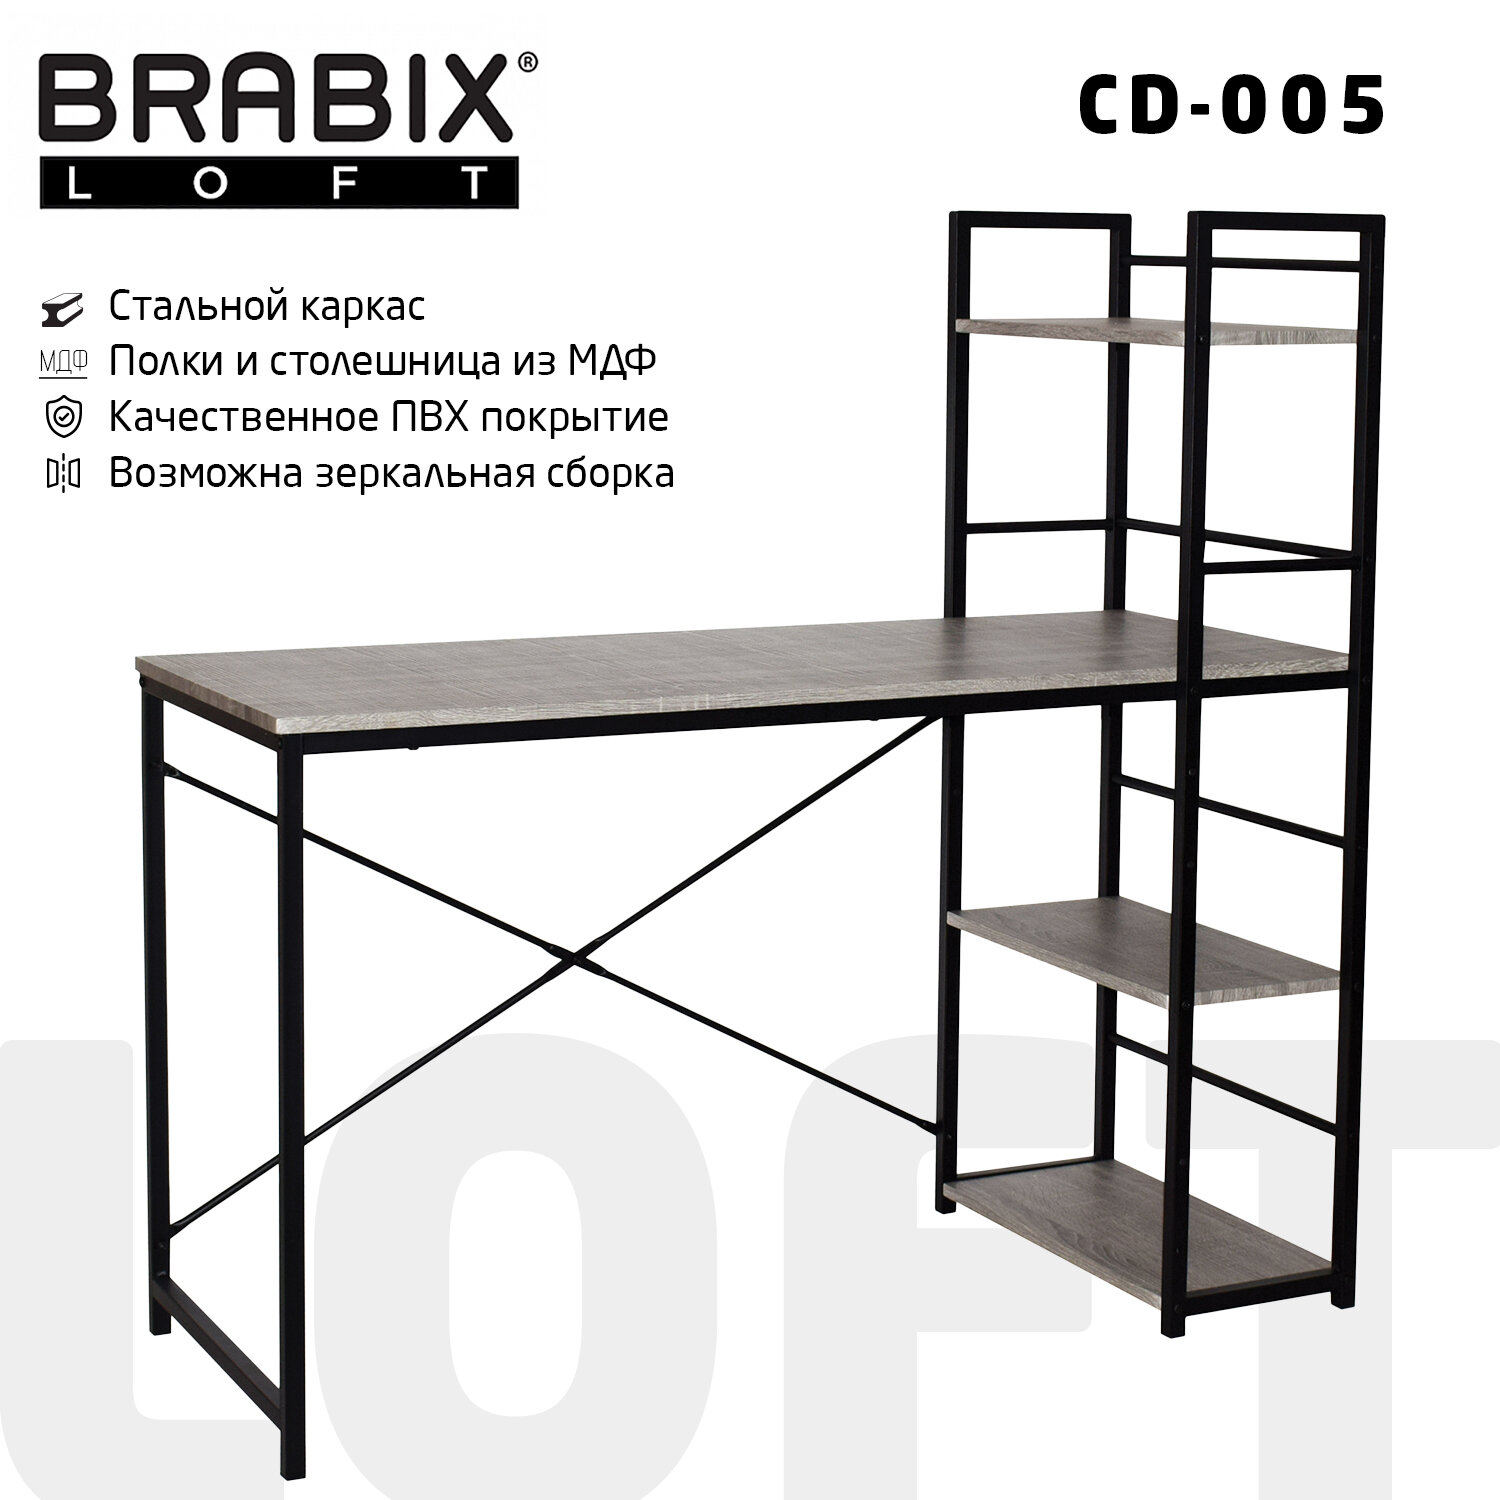 Brabix Стол на металлокаркасе BRABIX LOFT CD-005, 1200х520х1200 мм, 3 полки, цвет дуб антик, 641222